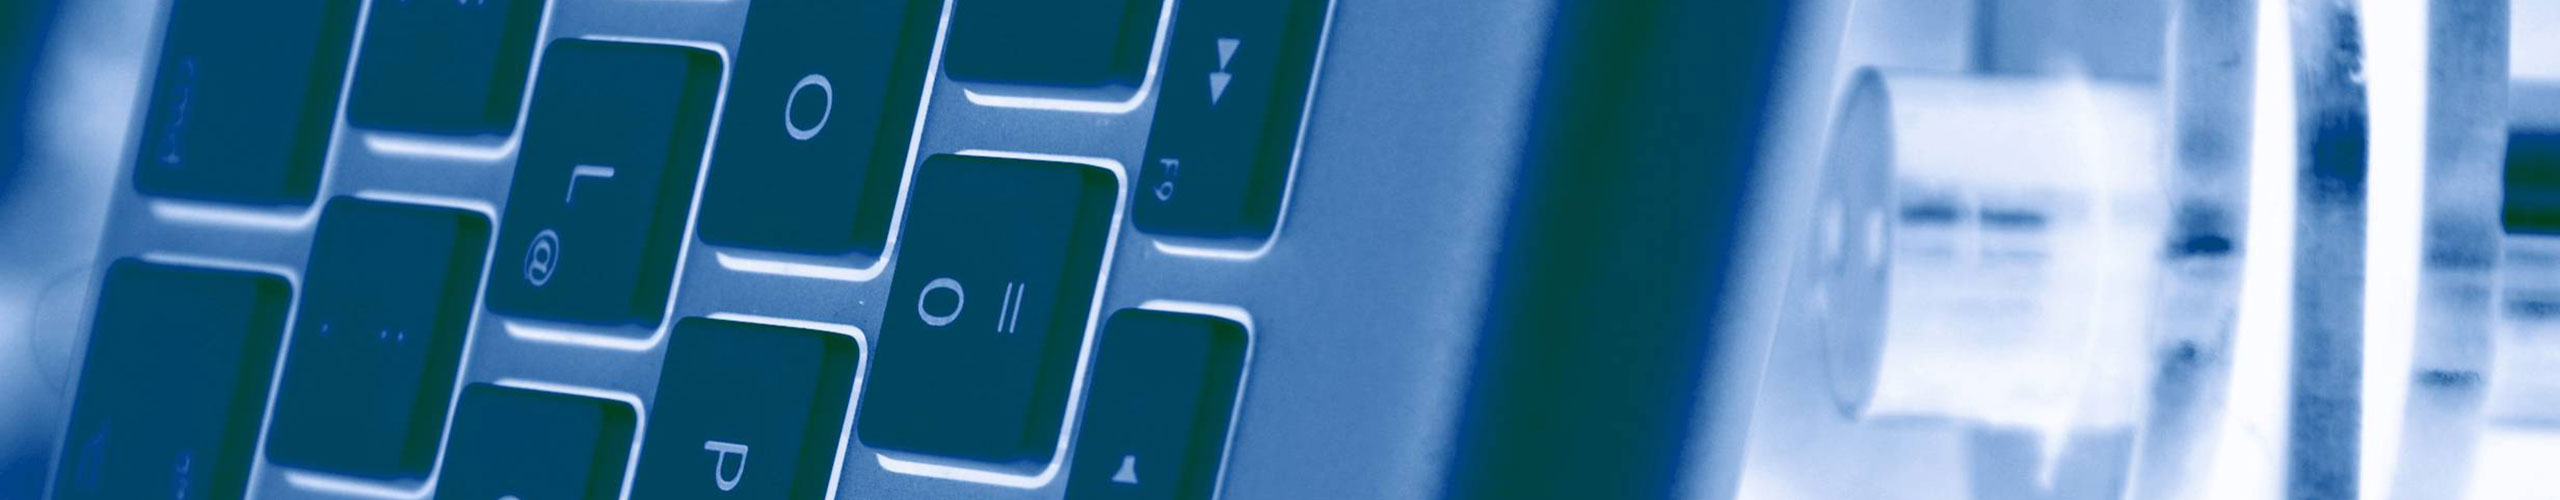 Tastatur blau - Contao, TYPO3, Wordpress Background